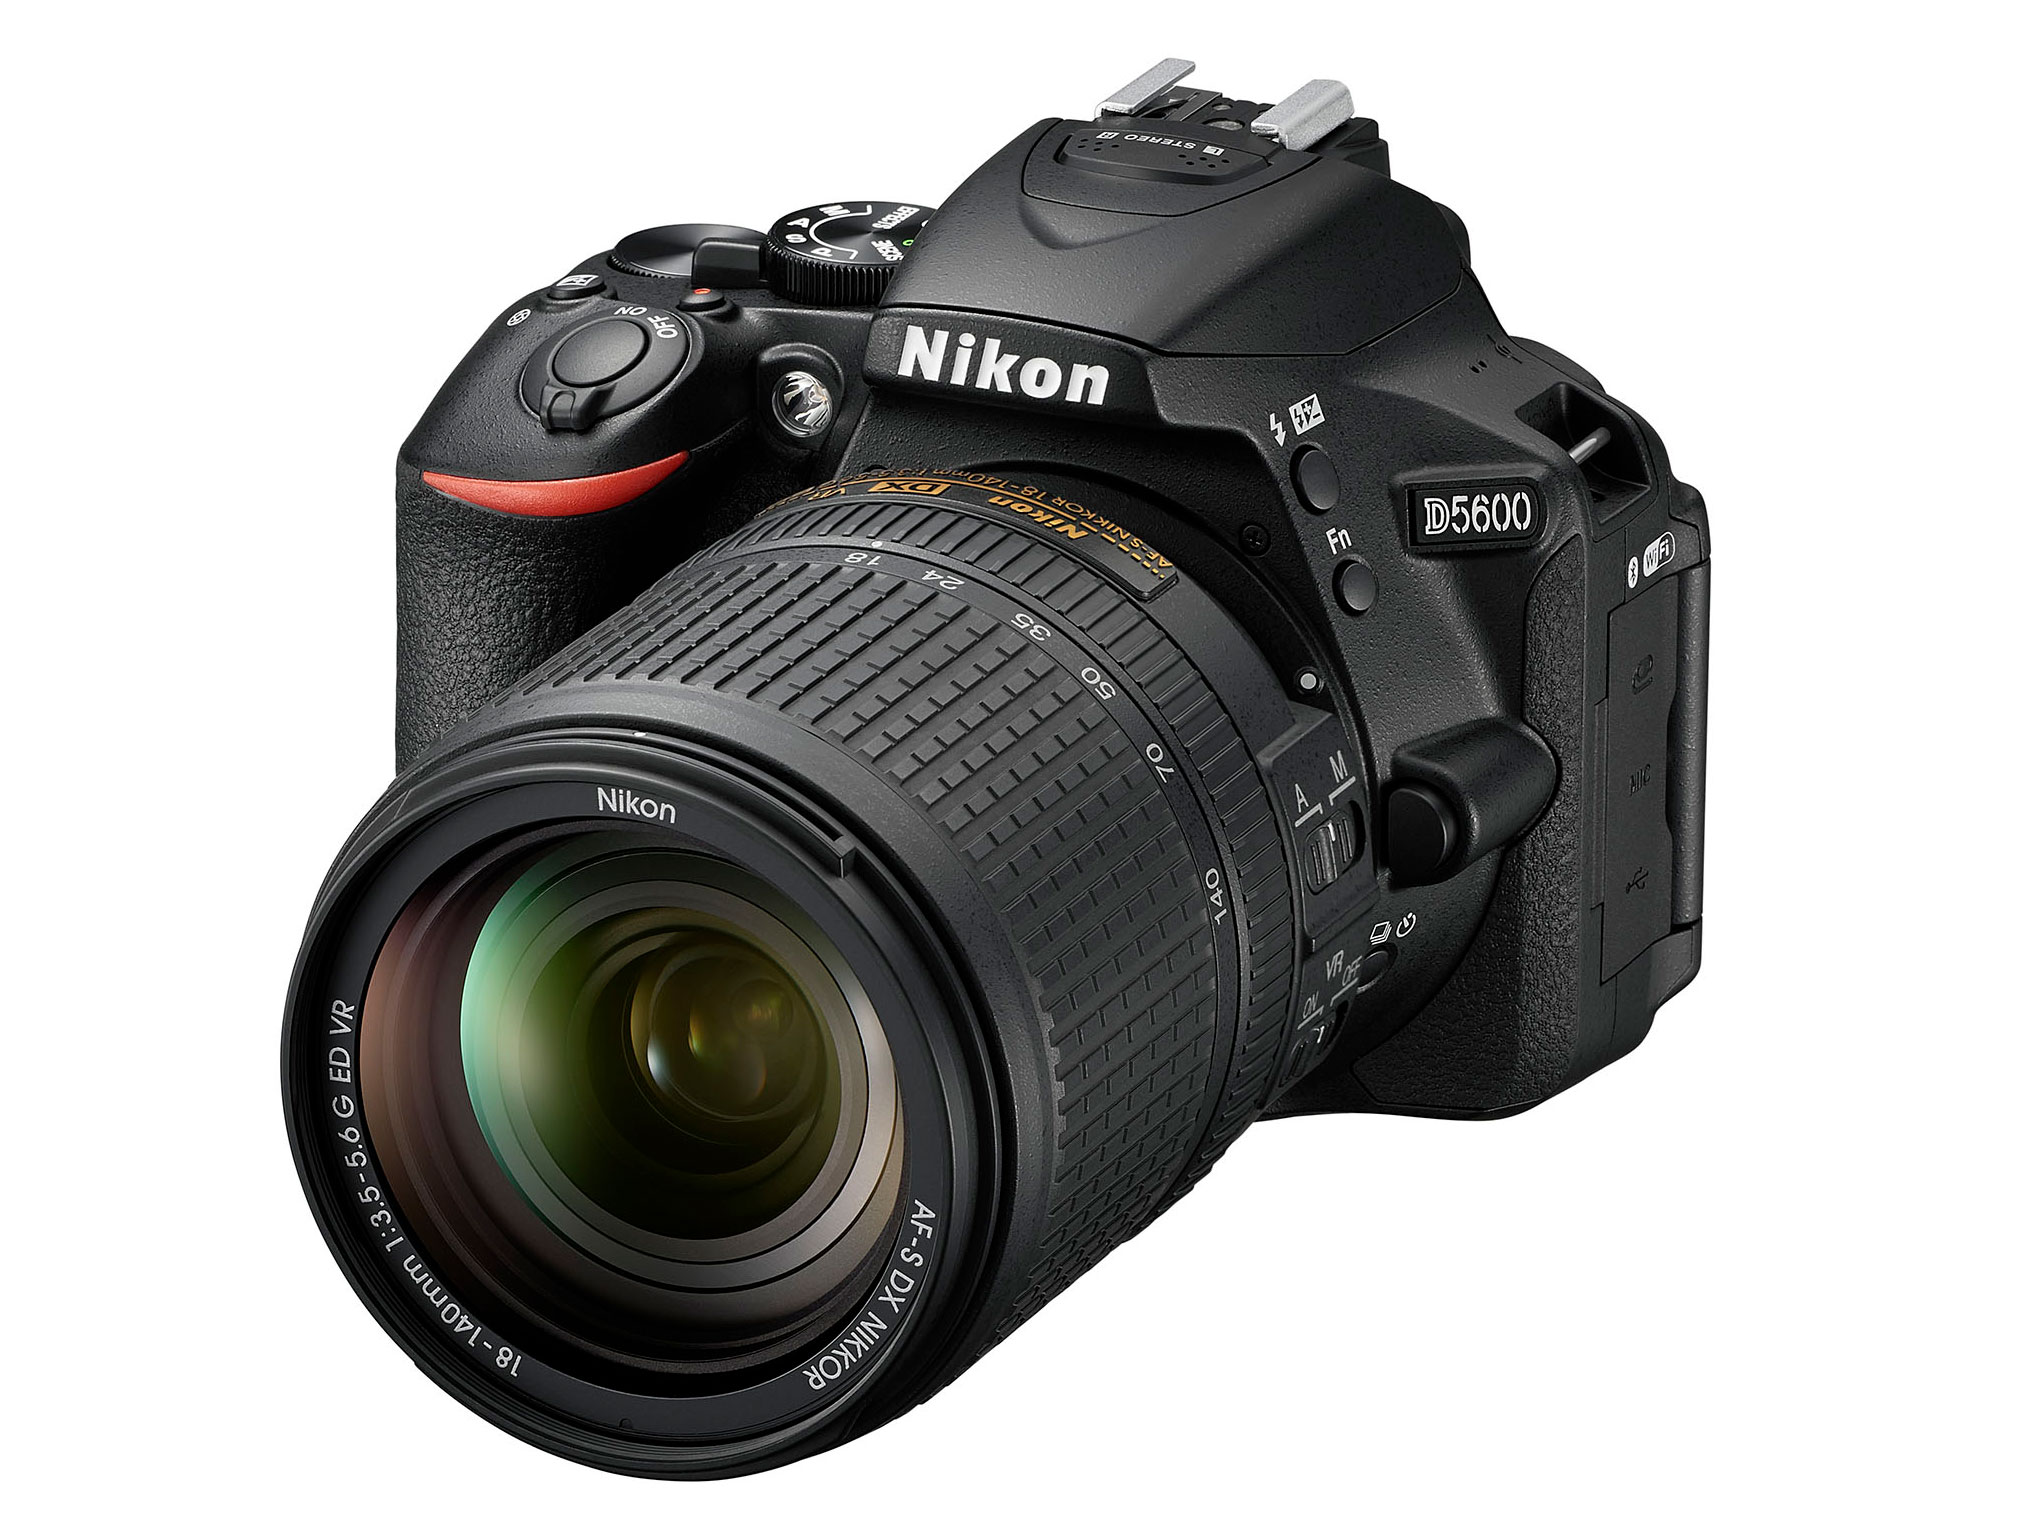 Hot Deal – Nikon D5600 w/ 18-55mm Lens Bundle for $585 ! (Gray Market)